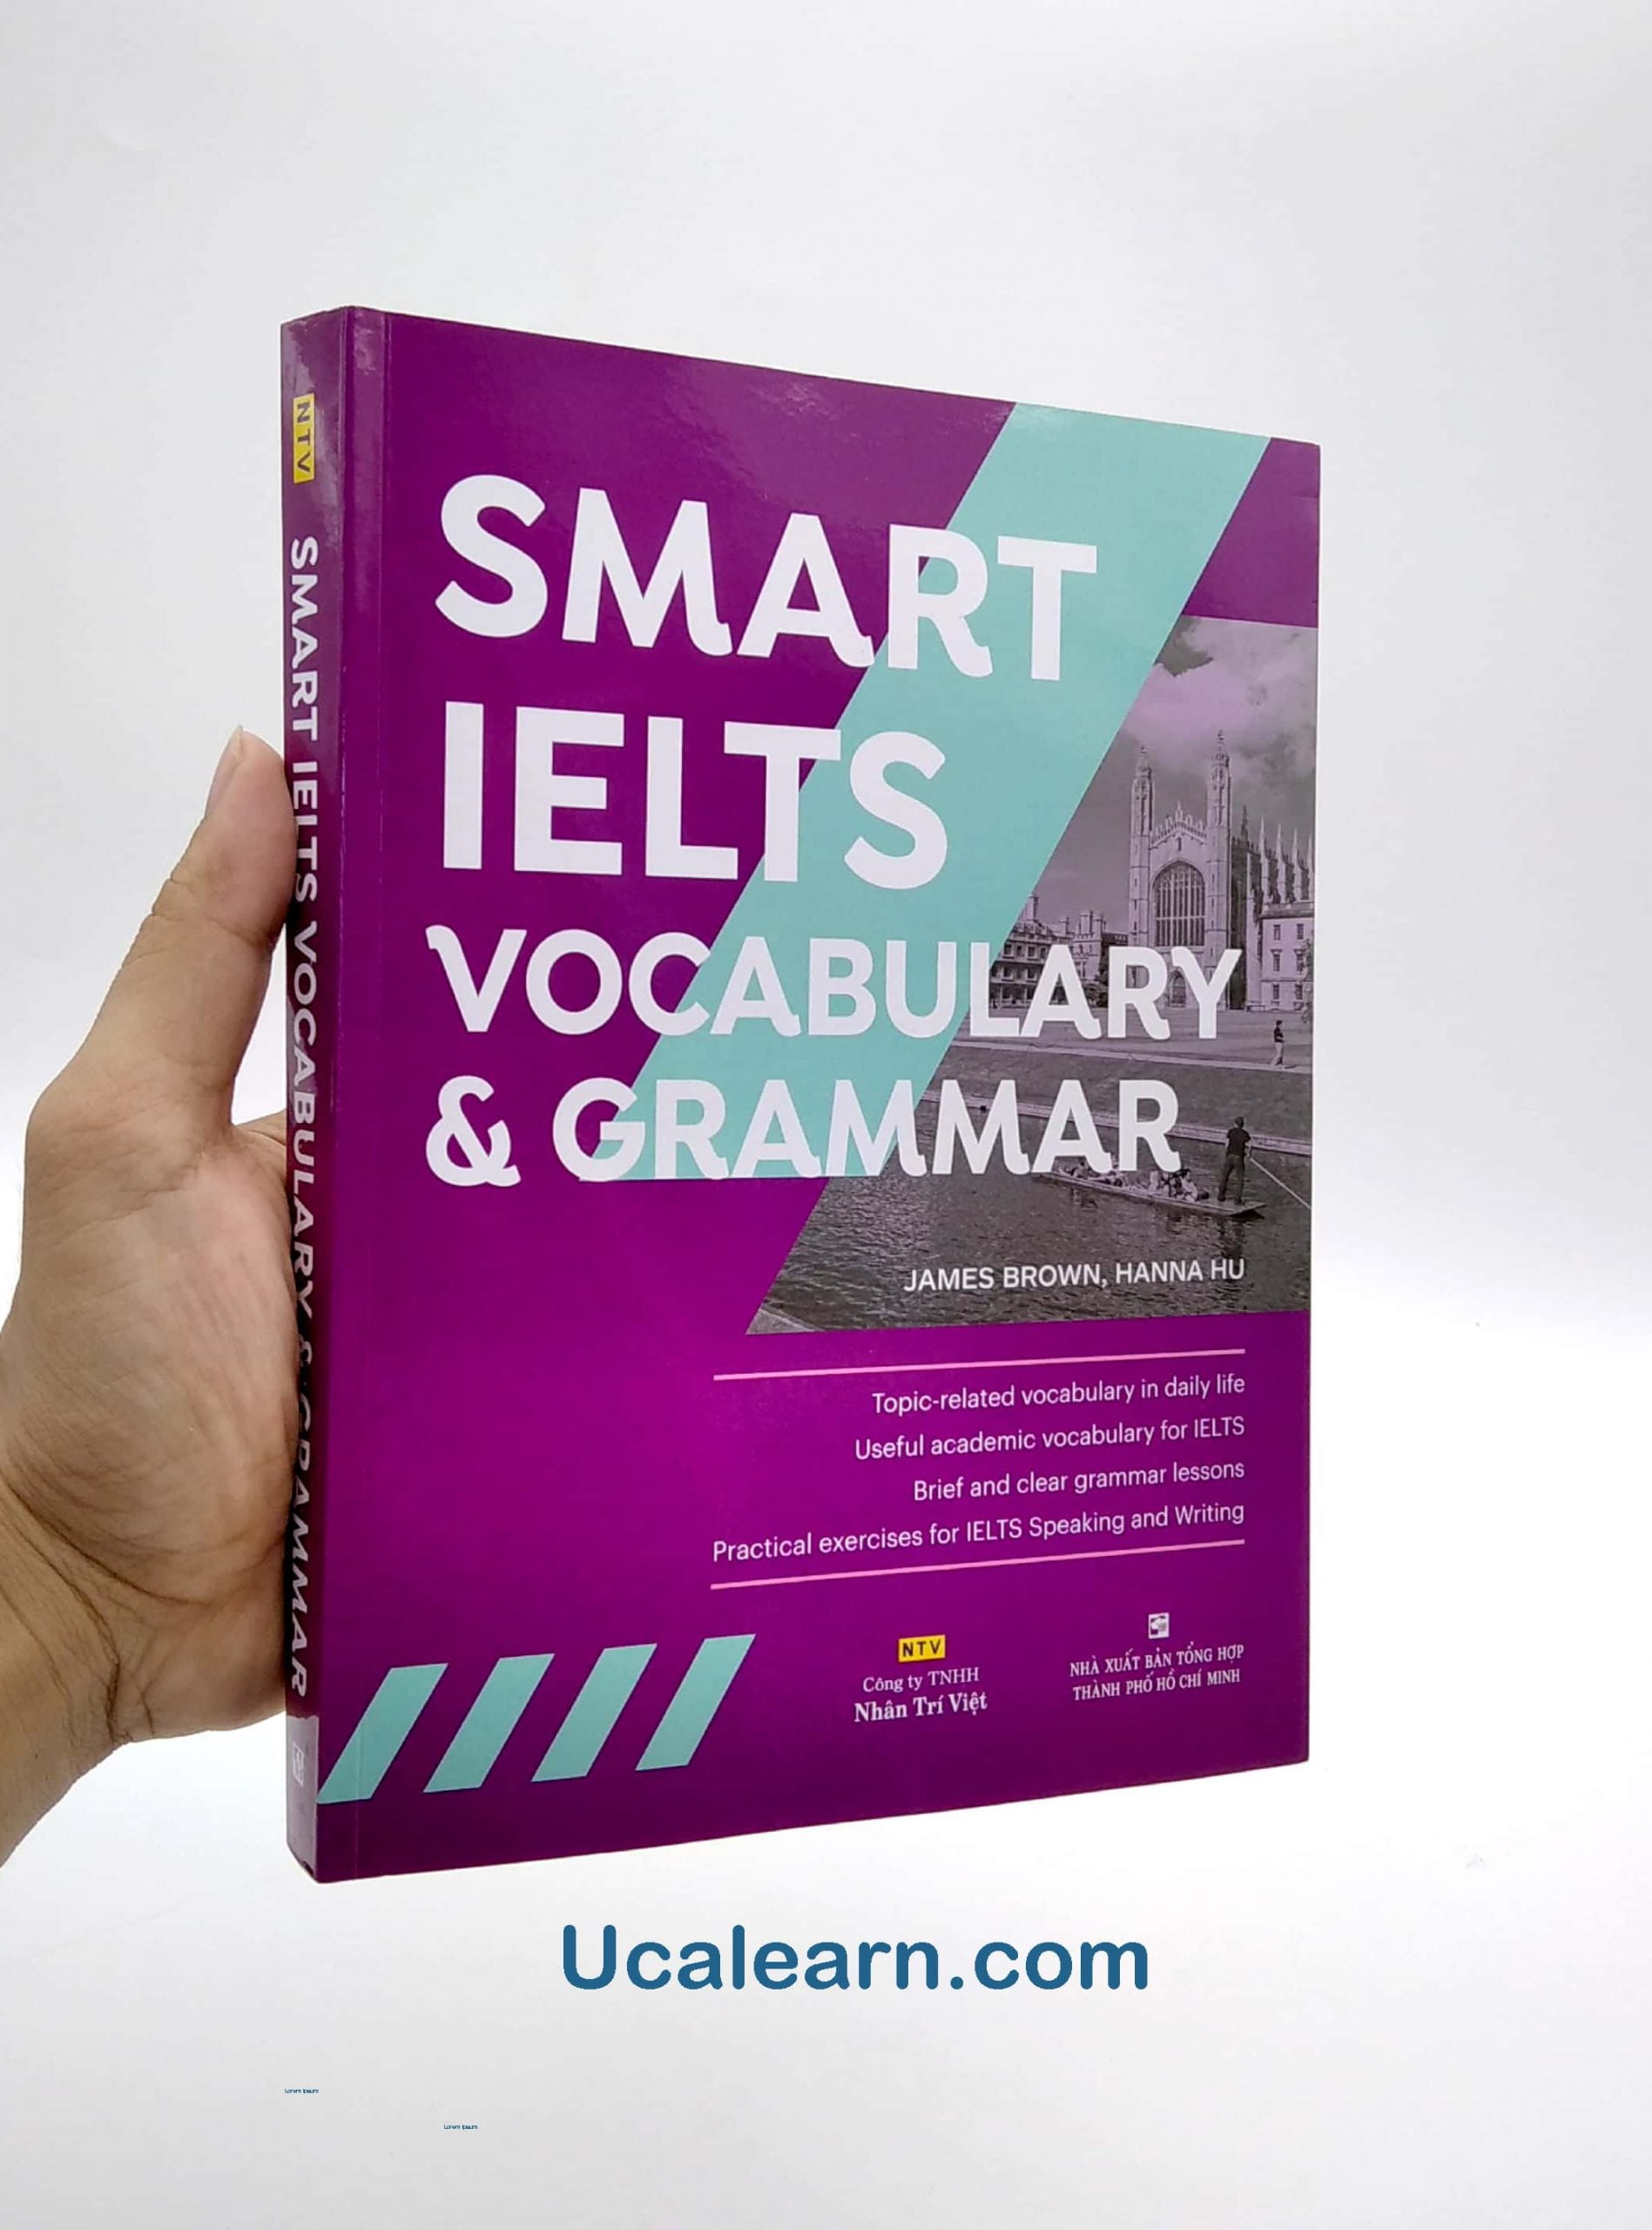 Smart IELTS Vocabulary and Grammar review